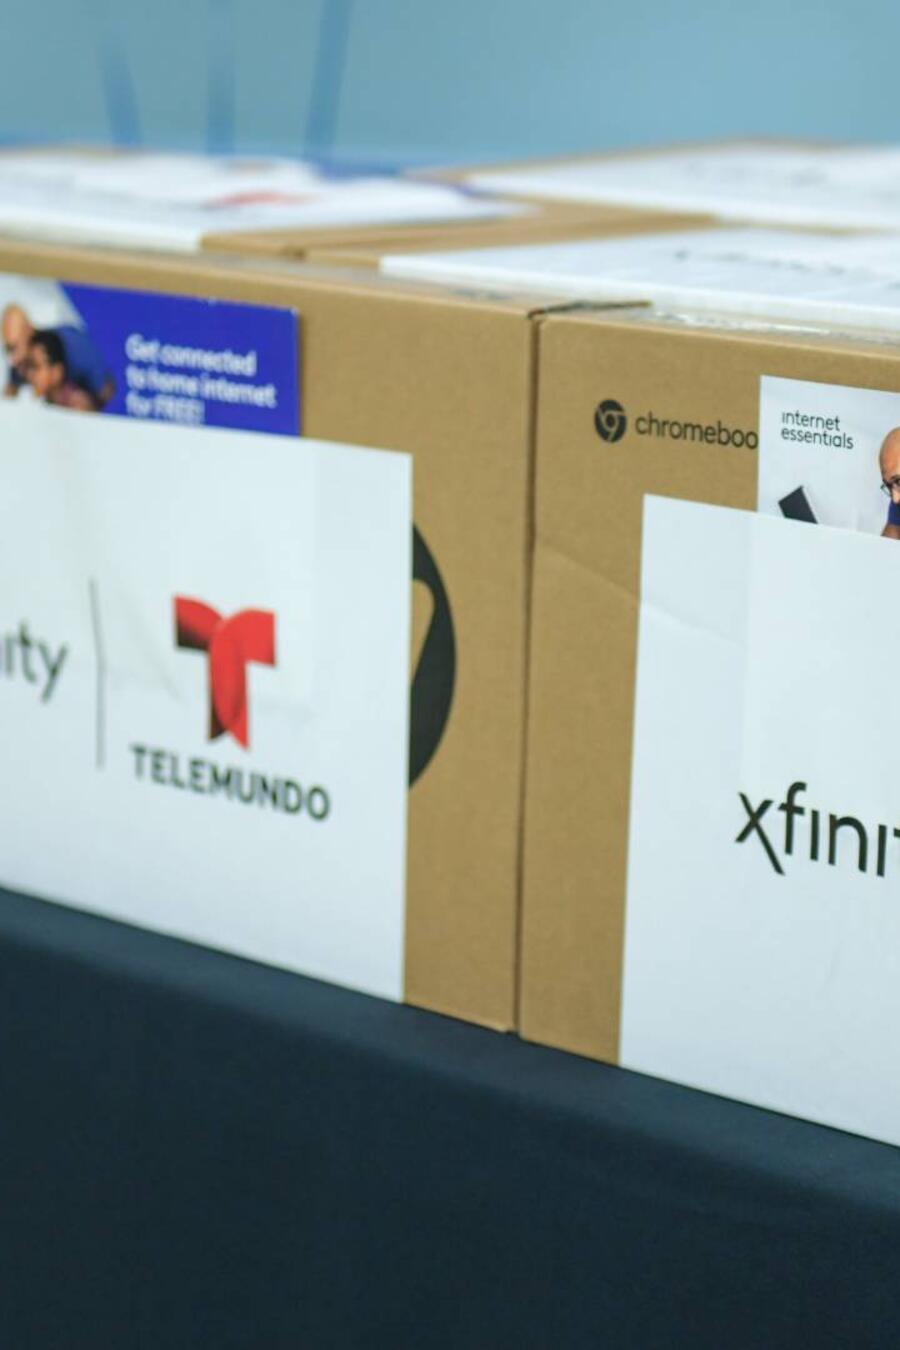 Laptops donadas por Telemundo